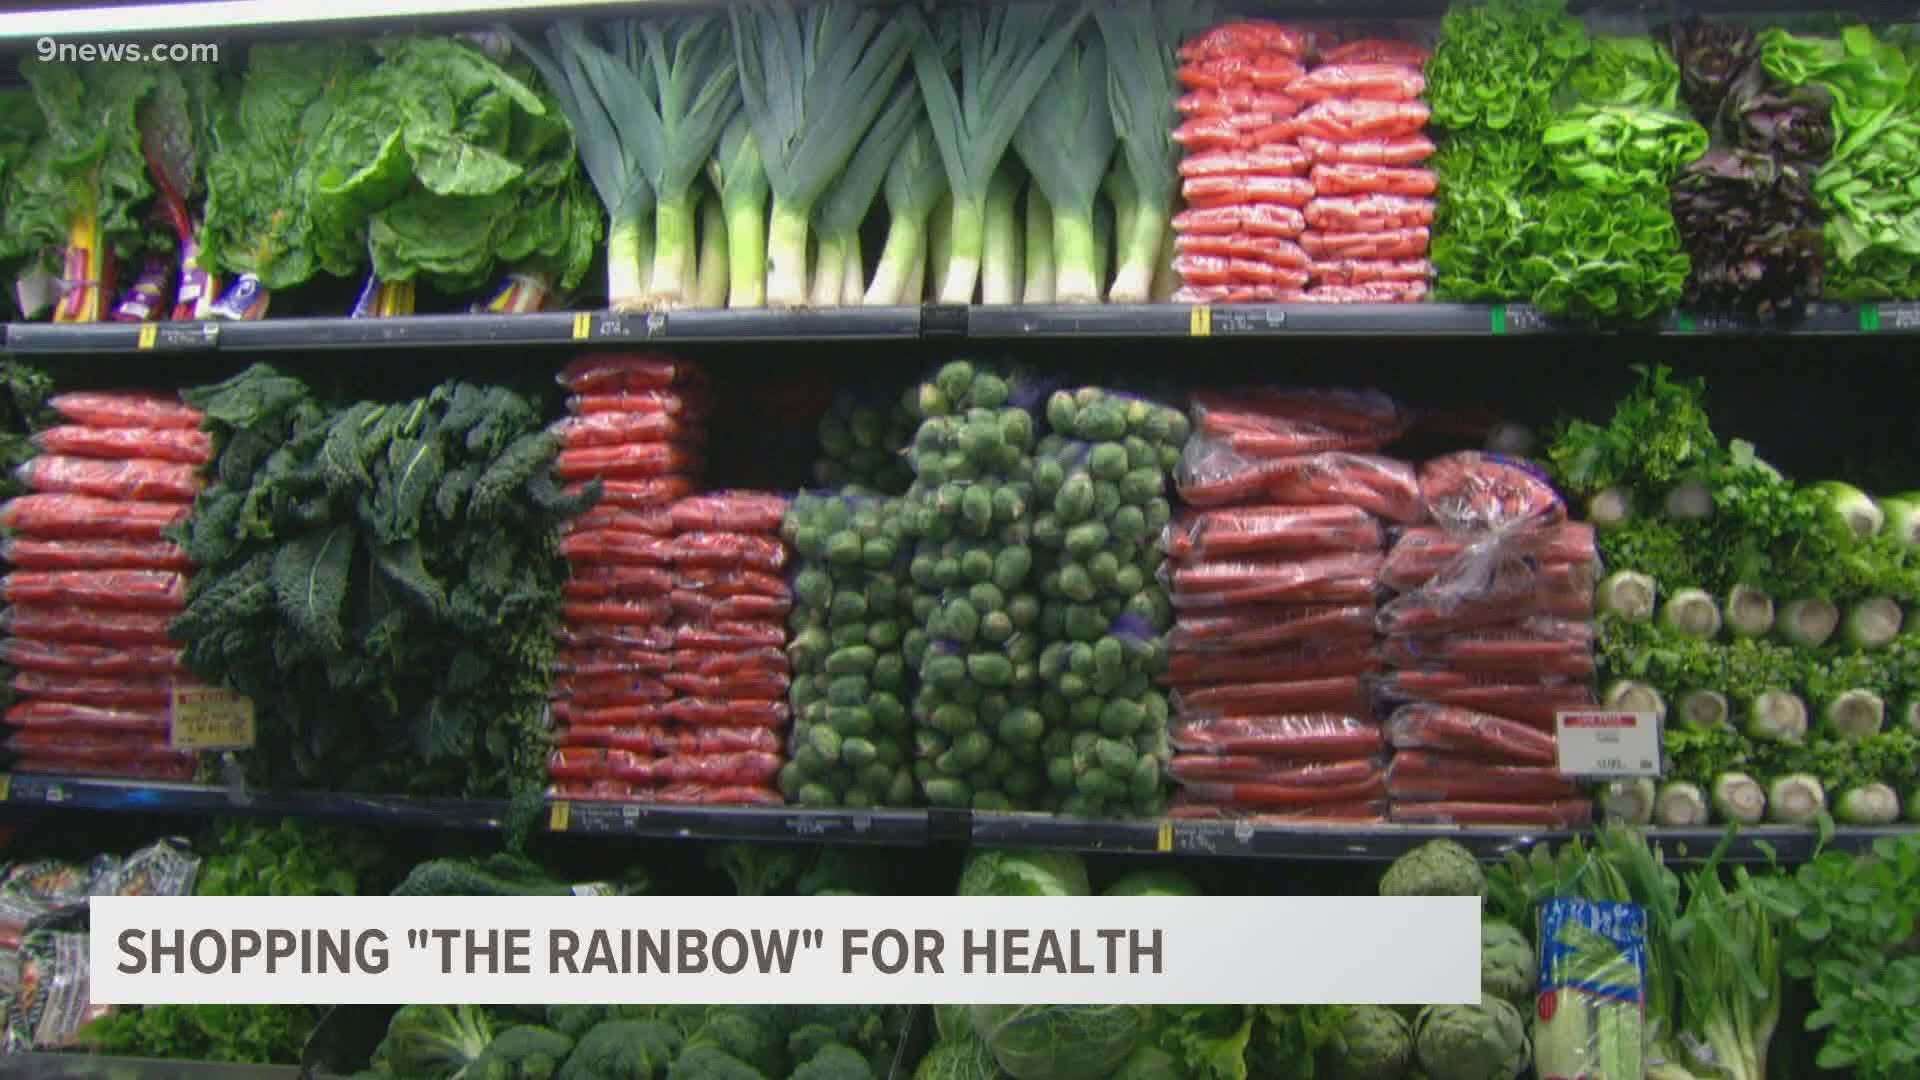 9NEWS nutritionist Kristin Kirkpatrick said the key is choosing a variety of deep-hued fruits and vegetables.